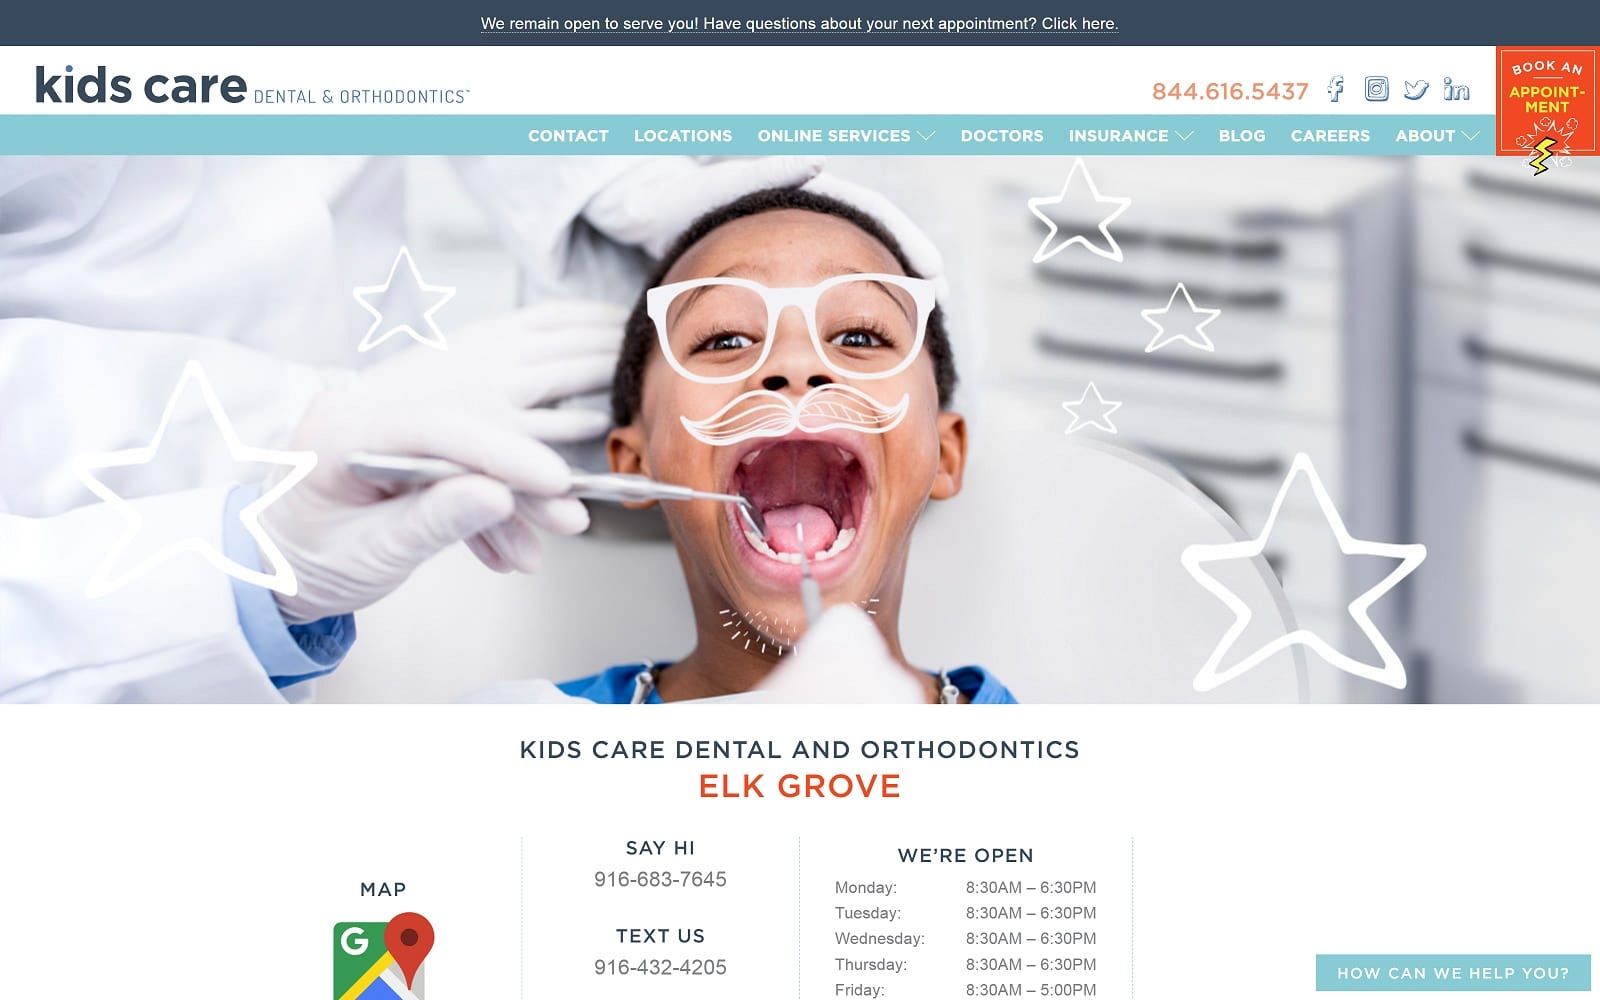 The Screenshot of Kids Care Dental & Orthodontics - Elk Grove kidscaredental.com/locations/elk-grove Website
